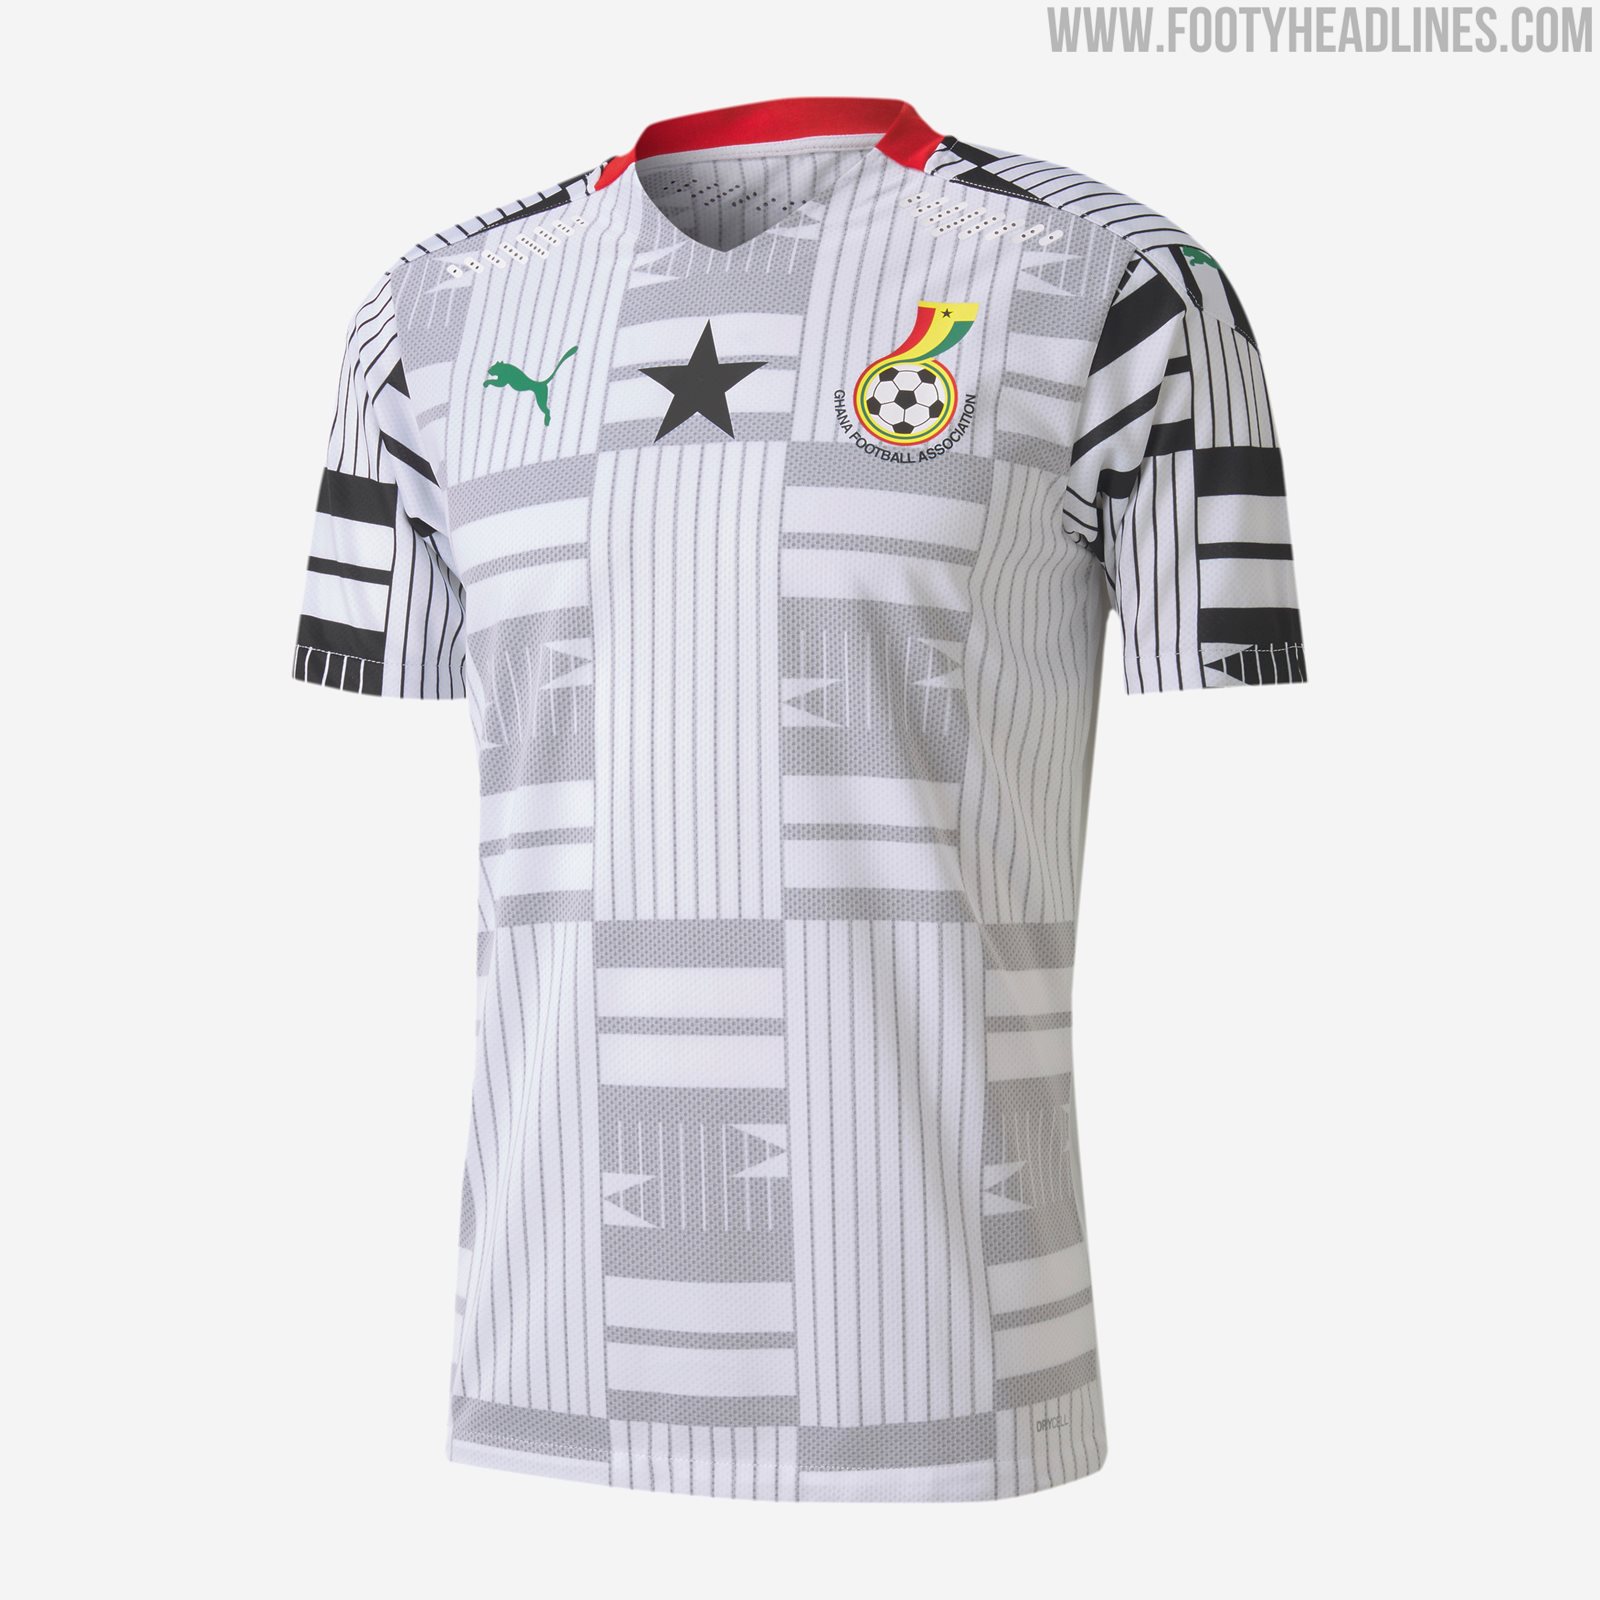 Outstanding Ghana 2020-2021 Home & Away Kits Released ...